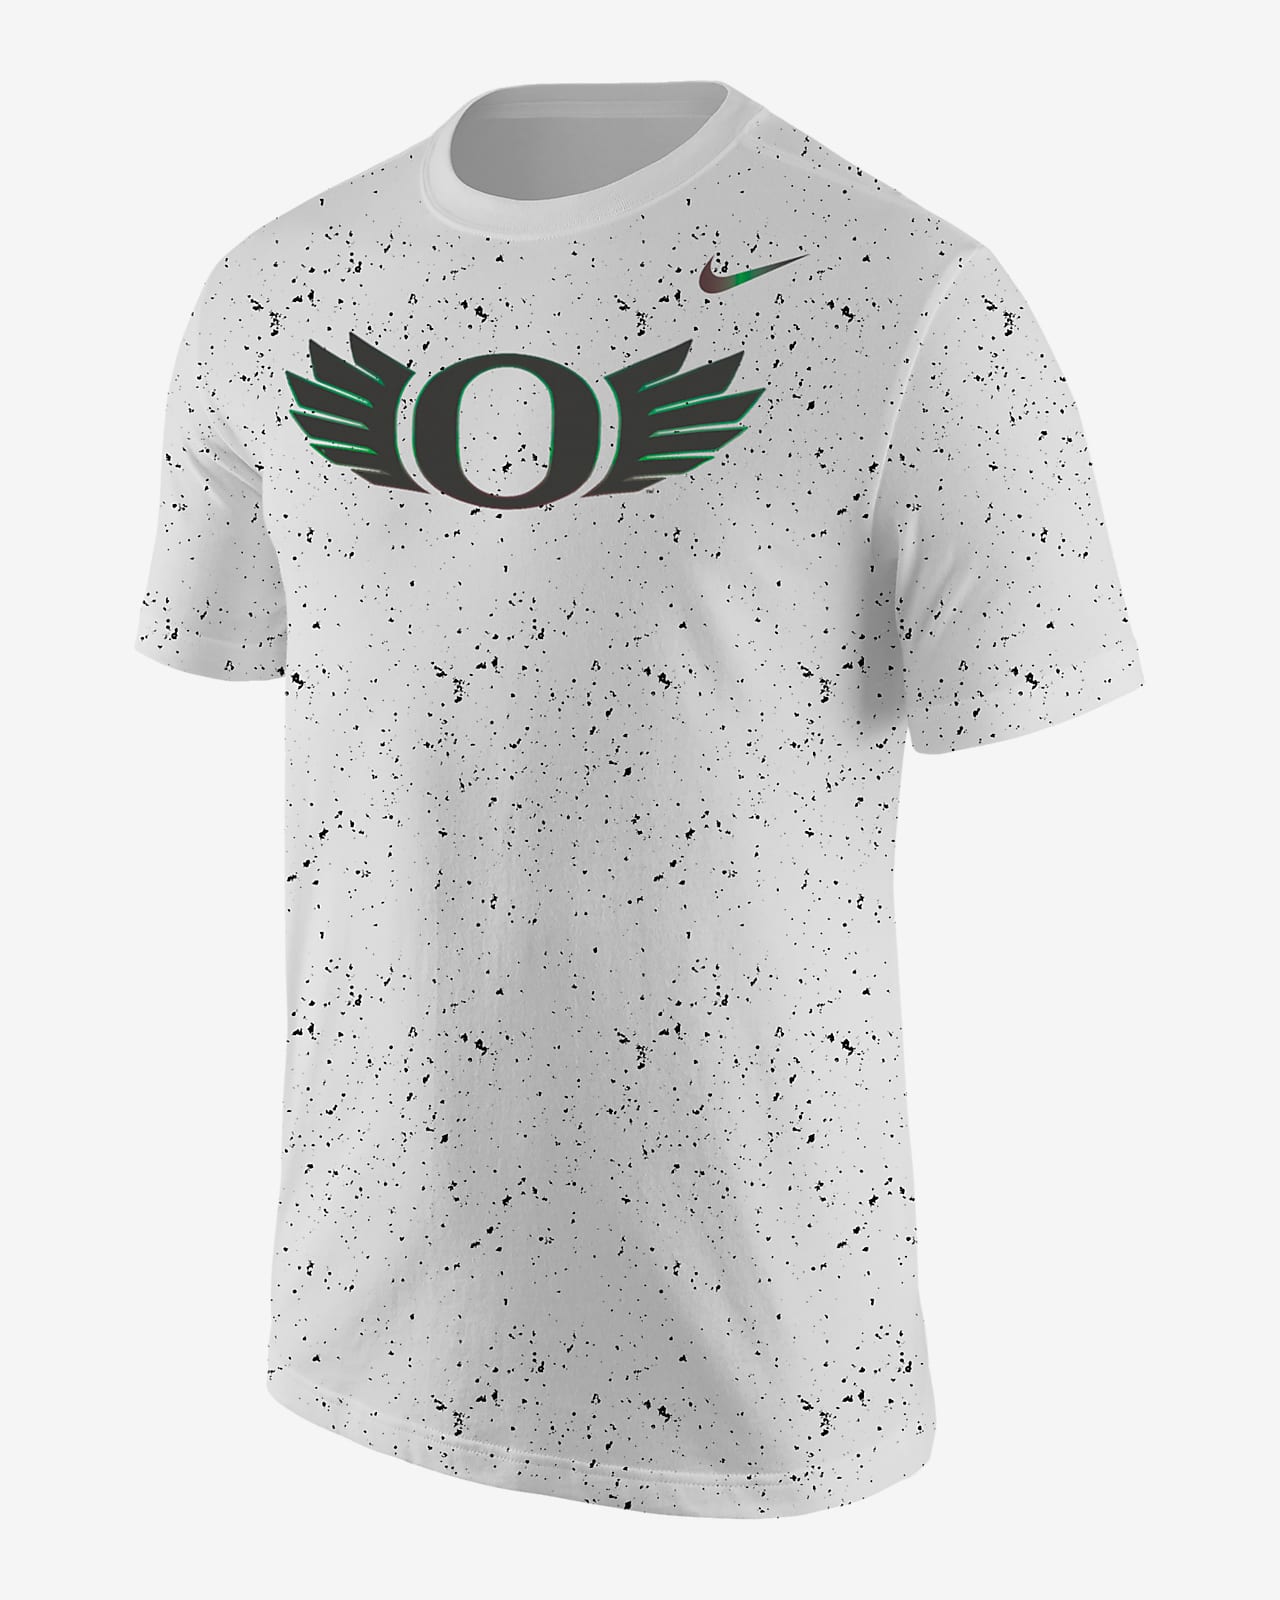 Playera universitaria Nike para hombre Oregon Max90